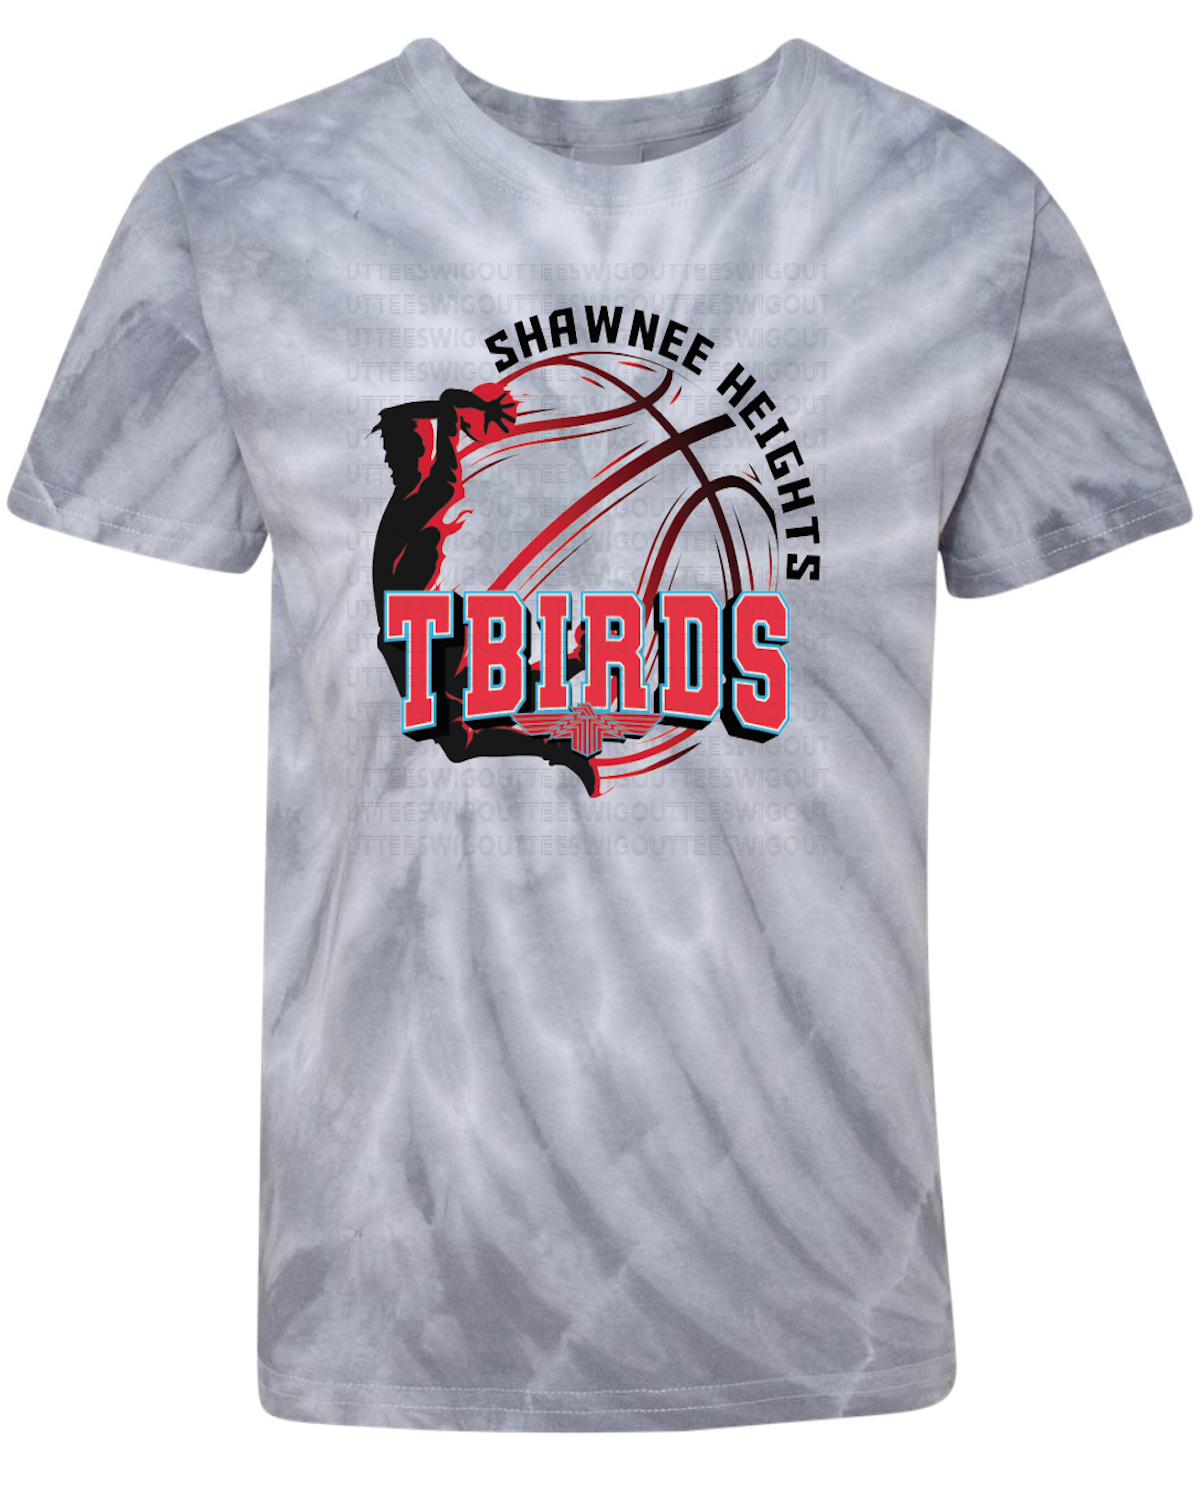 SHHS Tbirds Basketball Pinwheel Tie-Dyed T-shirt